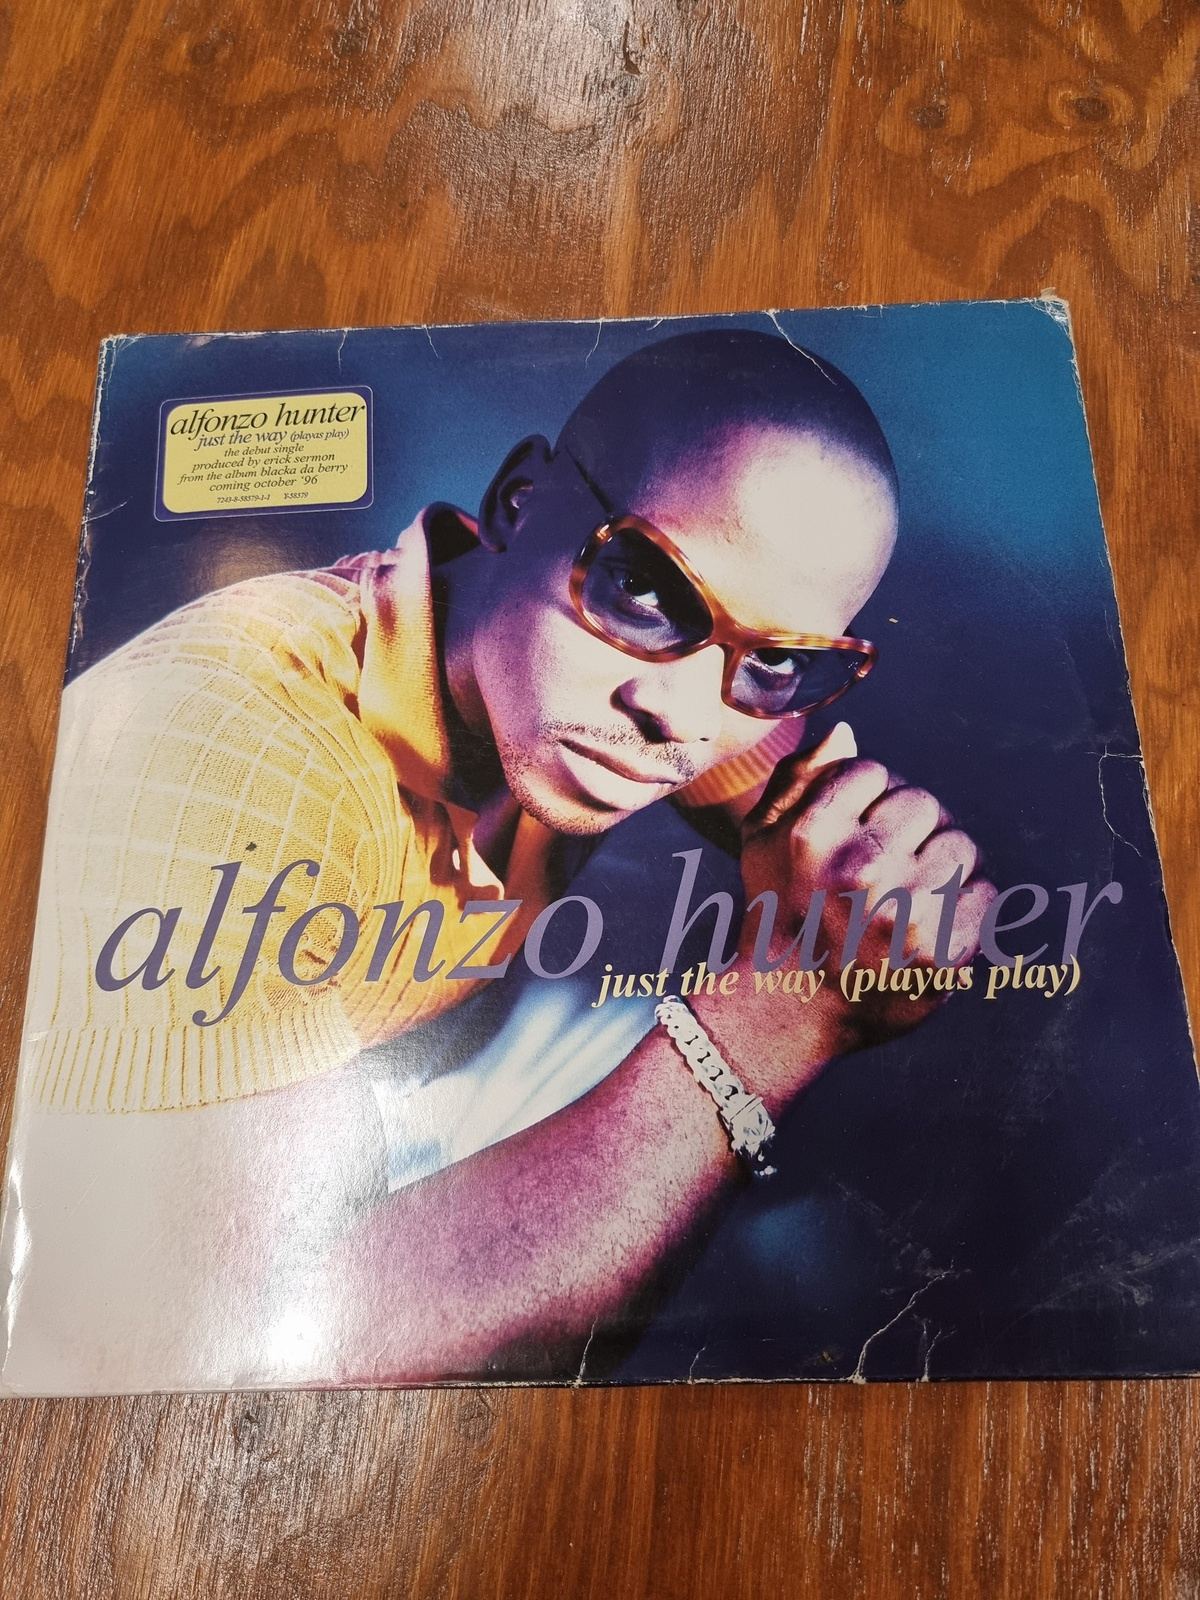 Alfonzo Hunter - Just the way playas play Vinyl Record